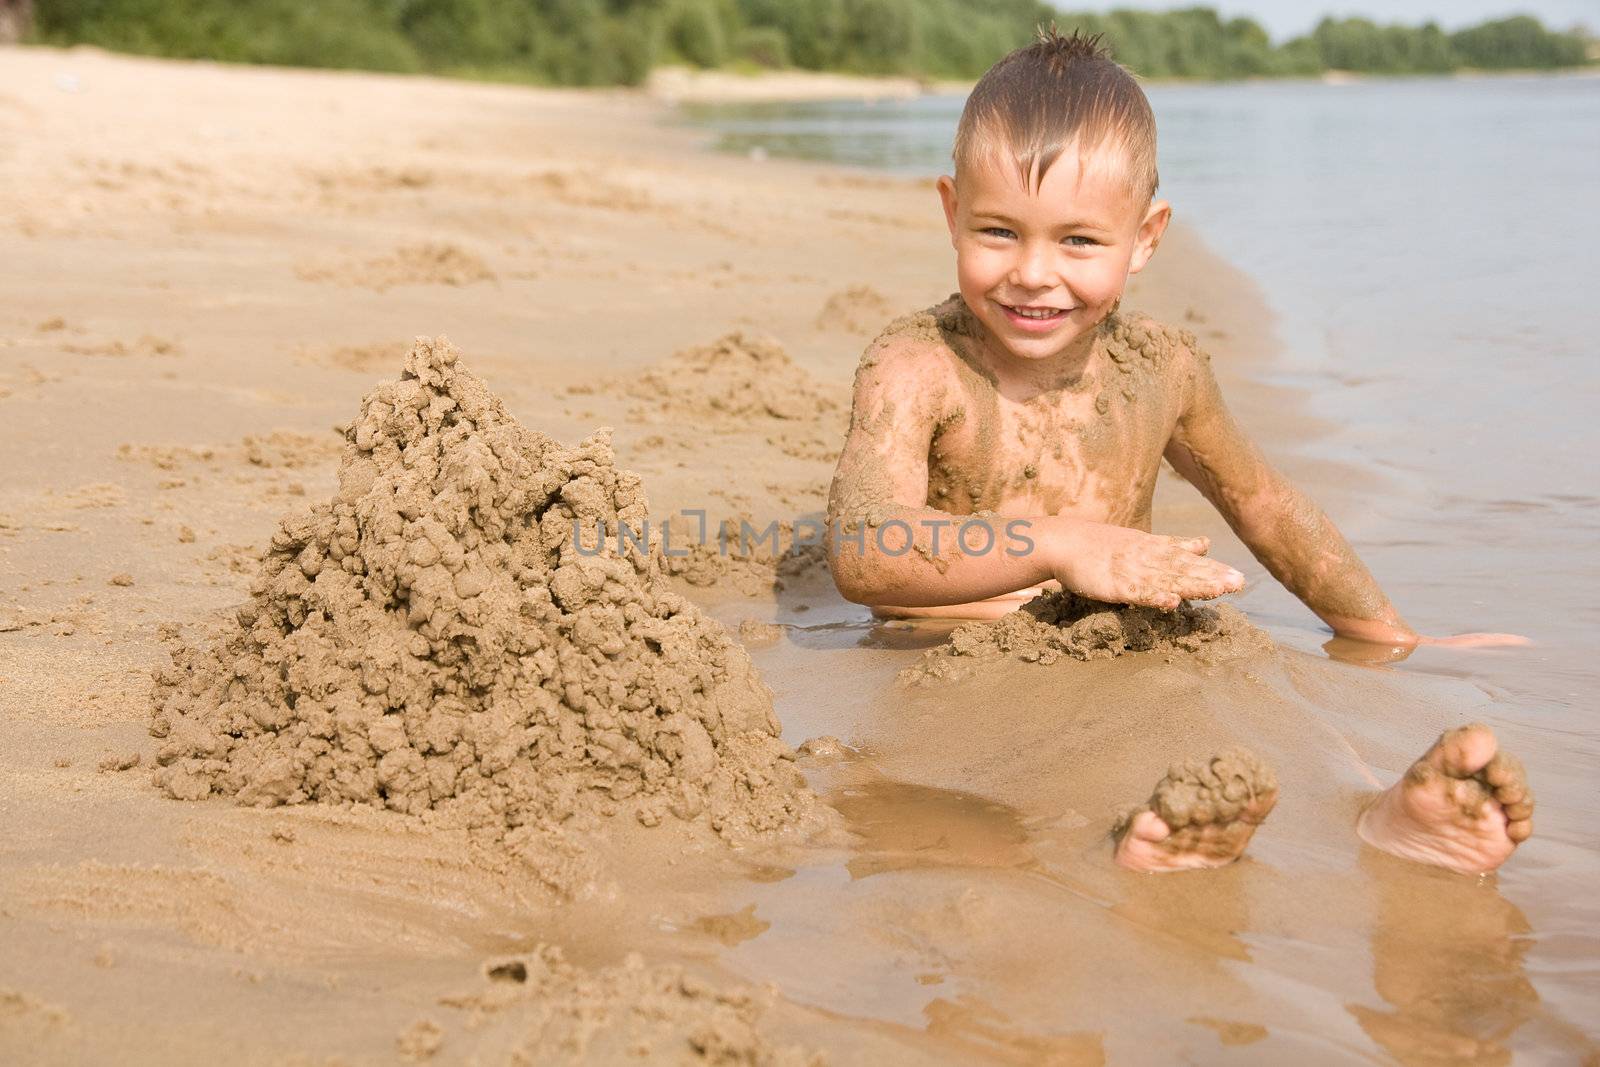 Boy on the beach digging himself